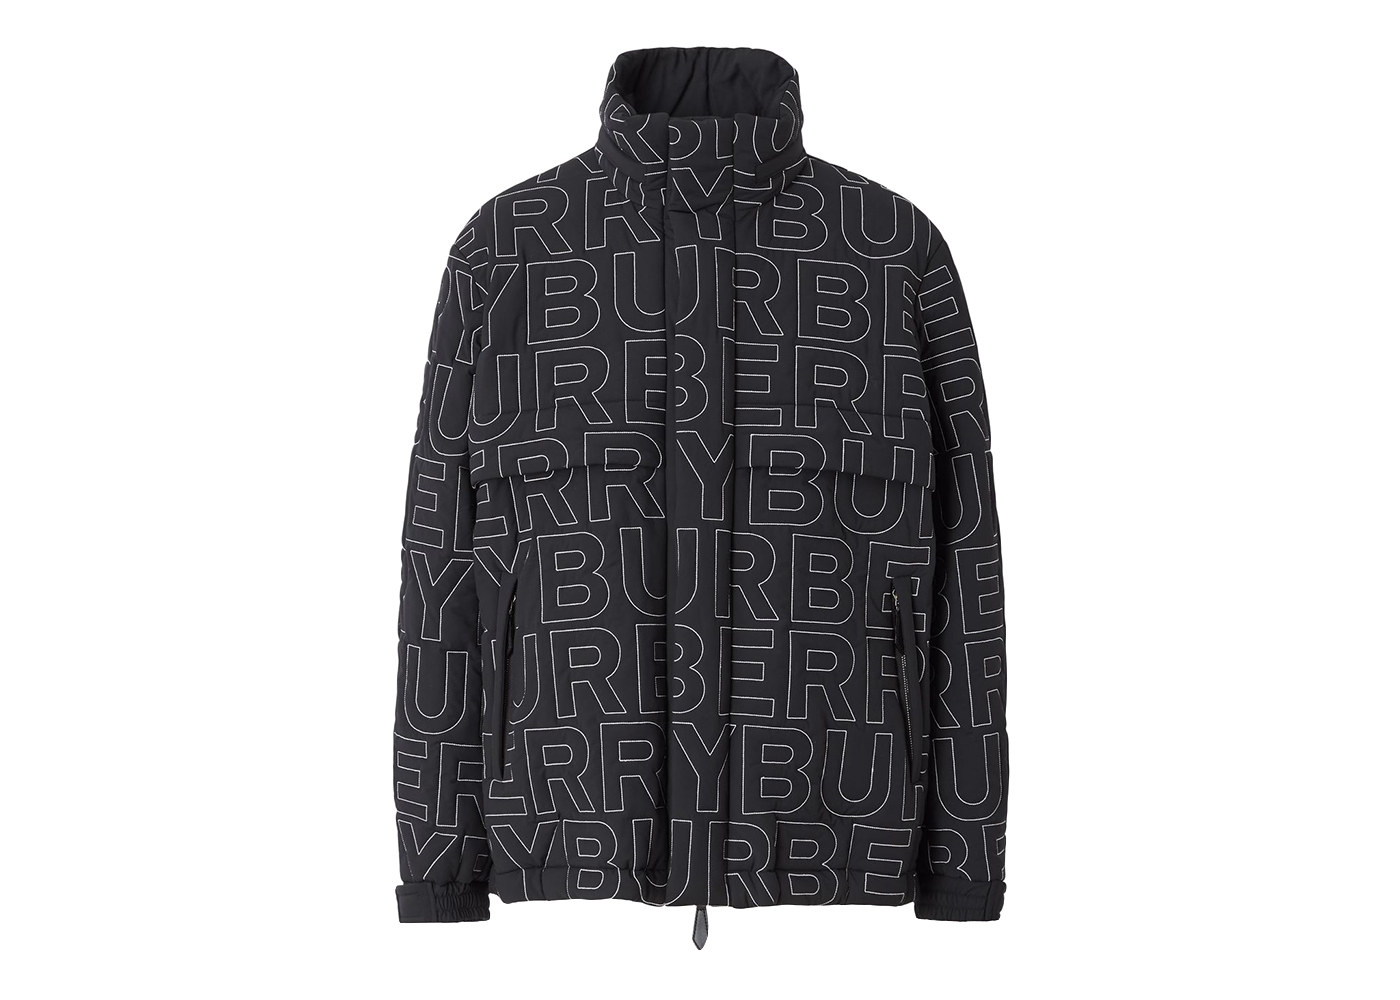 Burberry Embroidered Logo Packaway Jacket Black Men's - US